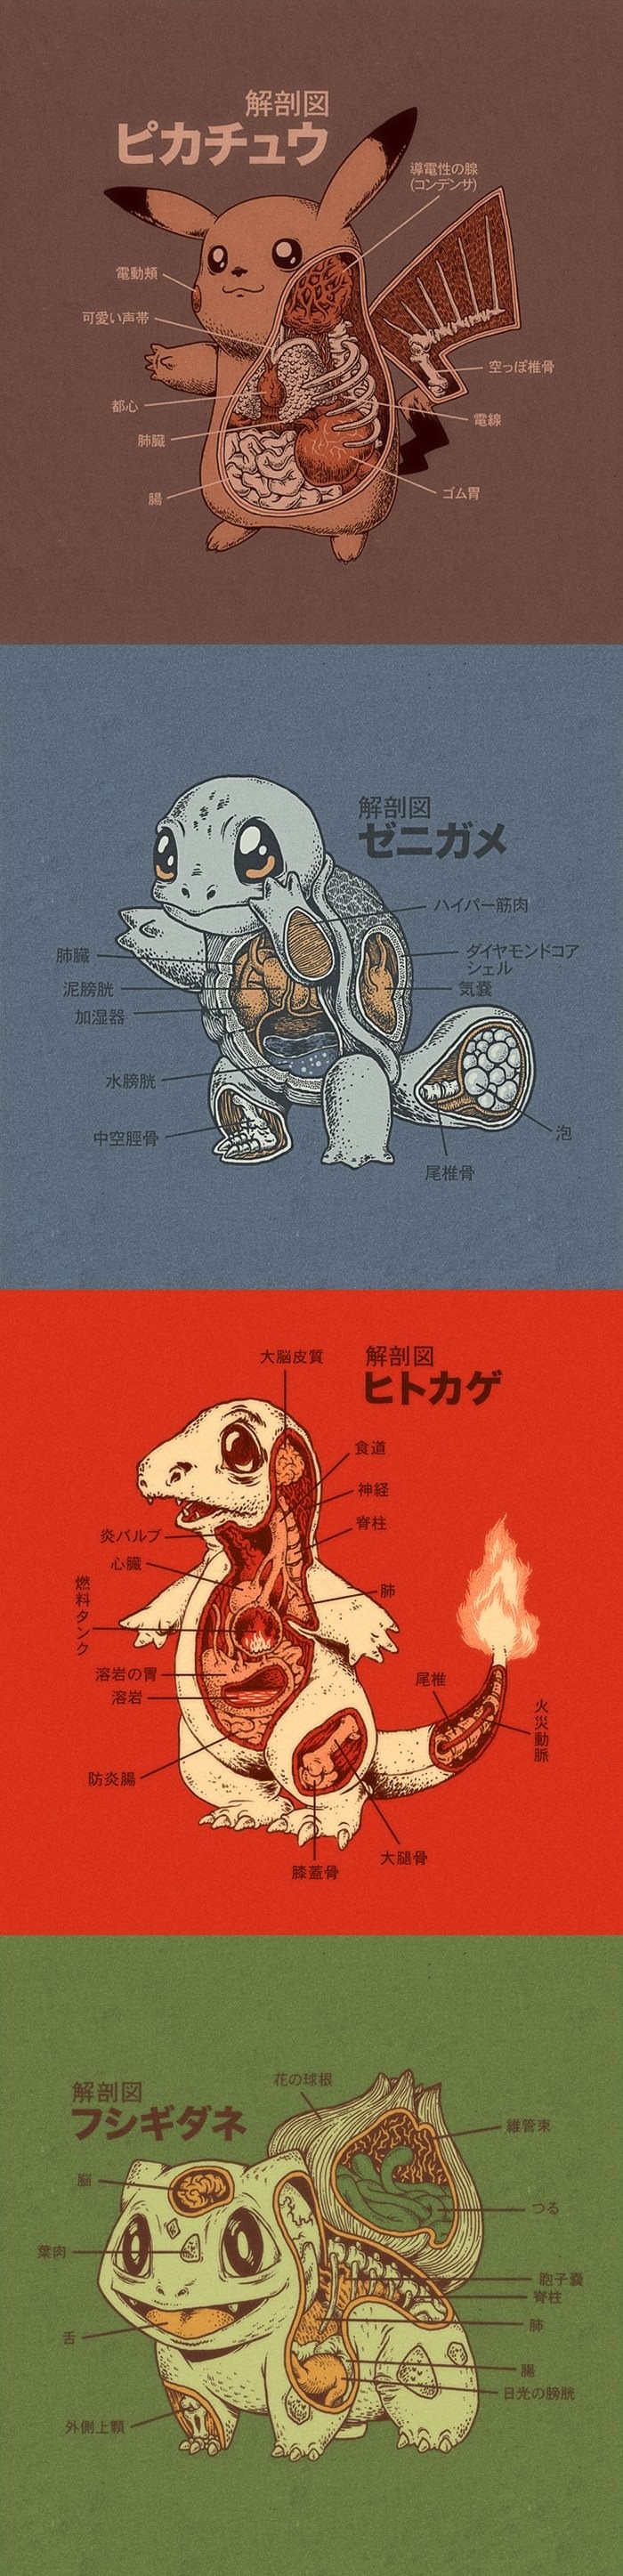 Pokemon Anatomy